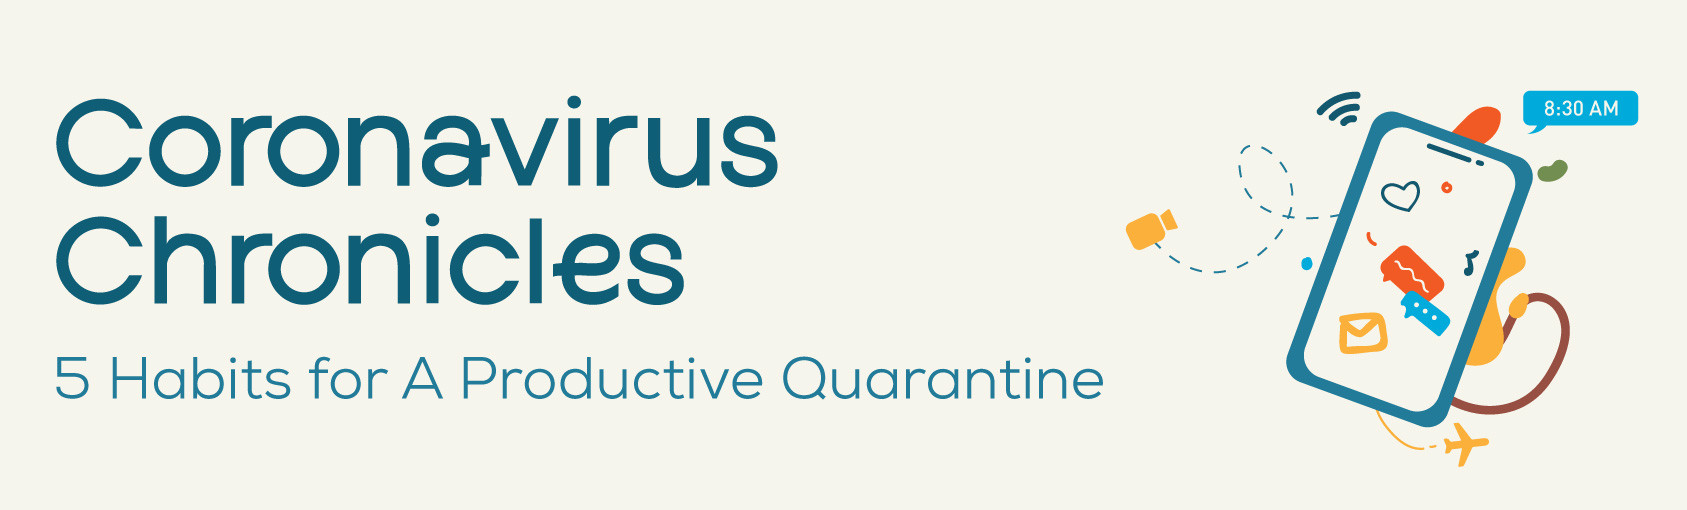 Coronavirus Chronicles: 5 Habits for A Productive Quarantine banner